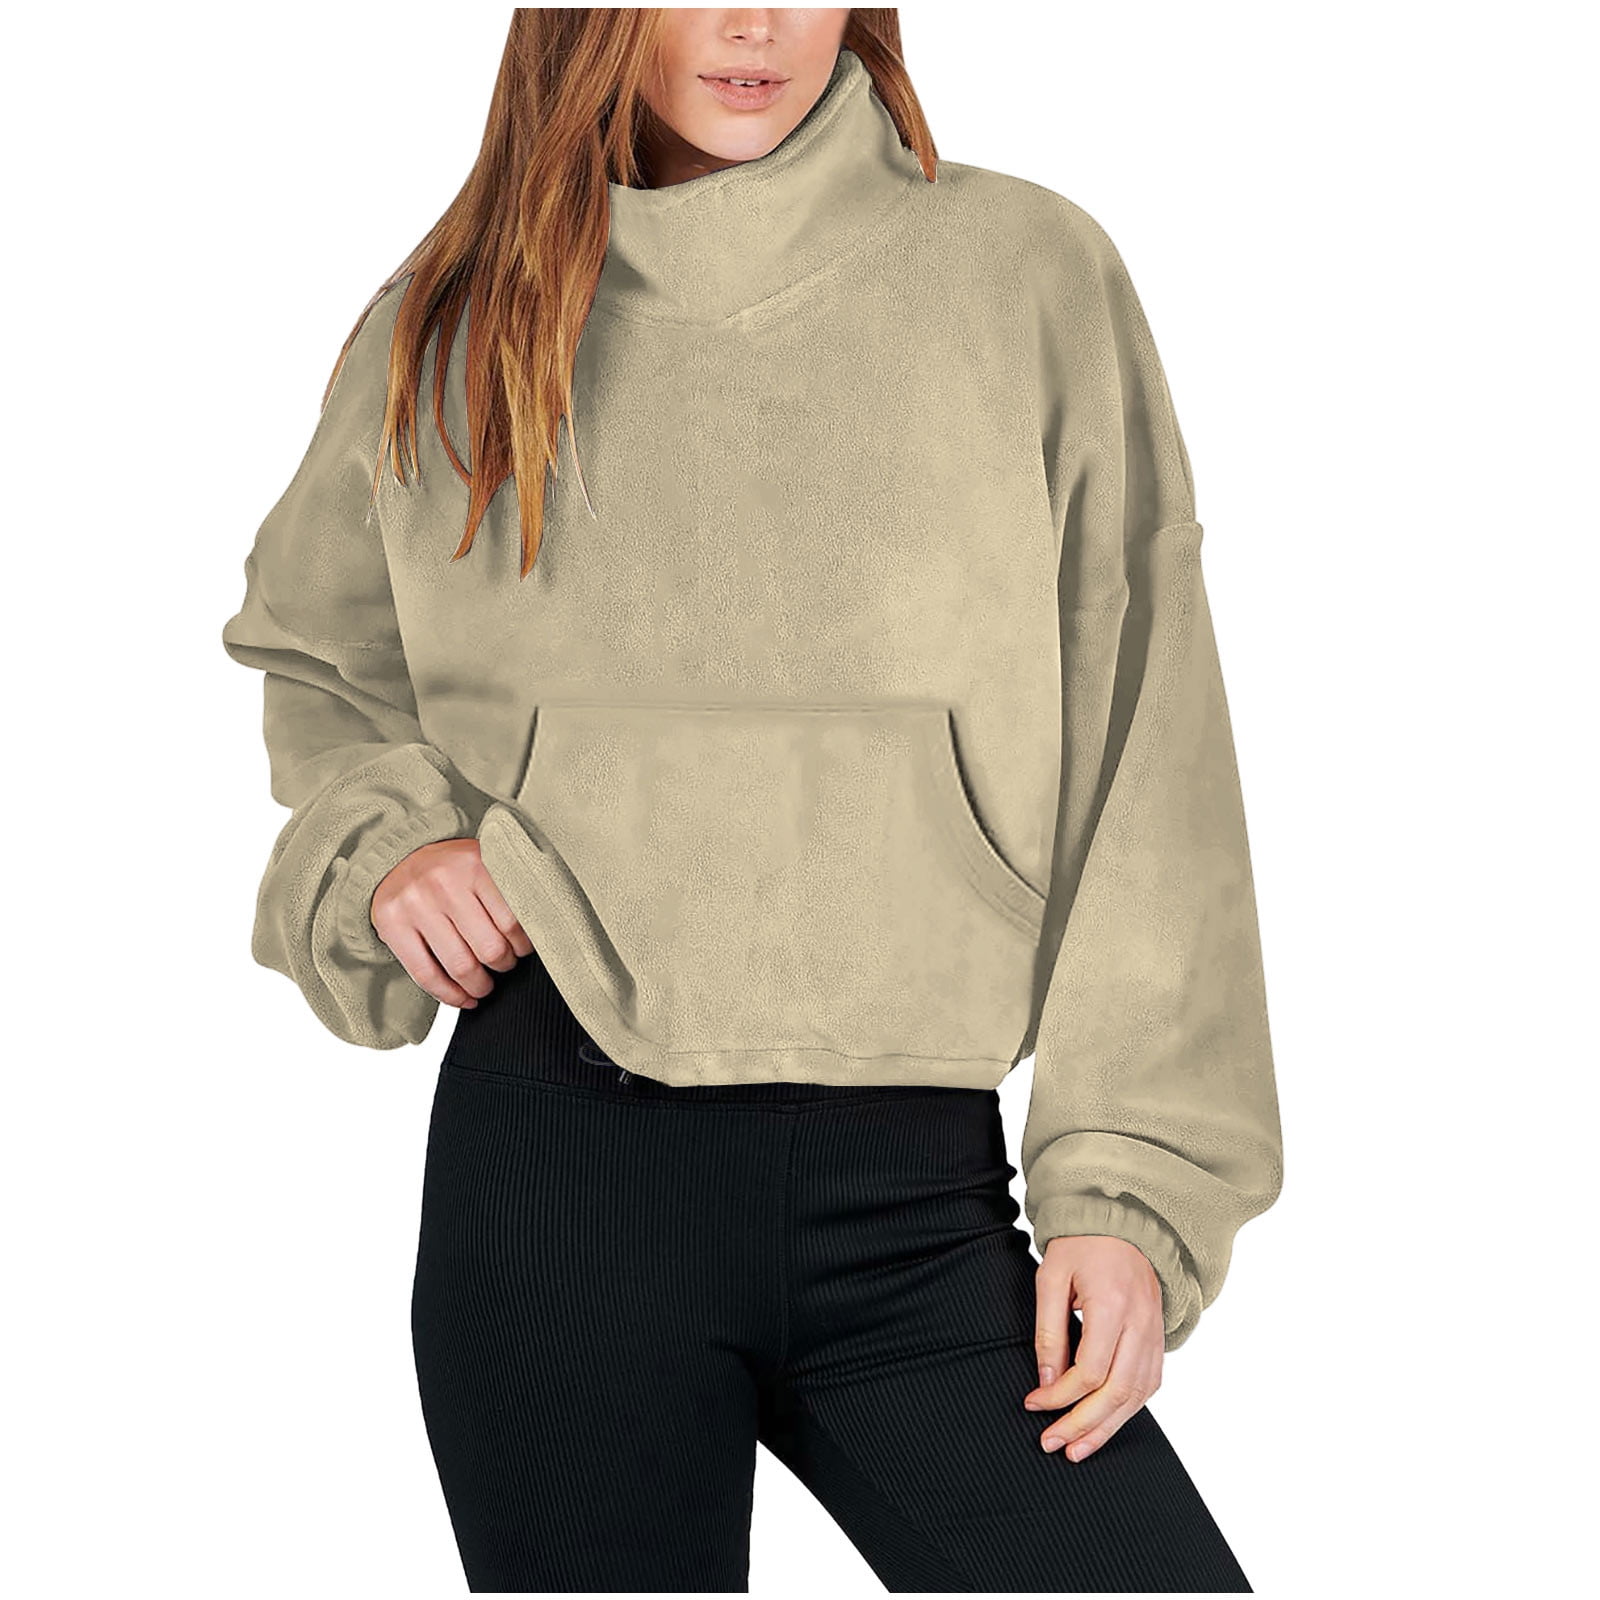 xkwyshop Women's Oversized Fleece Sweatshirts Long Sleeve Crew Neck Pullover  Sweatshirt Casual Hoodie Tops Brown S 